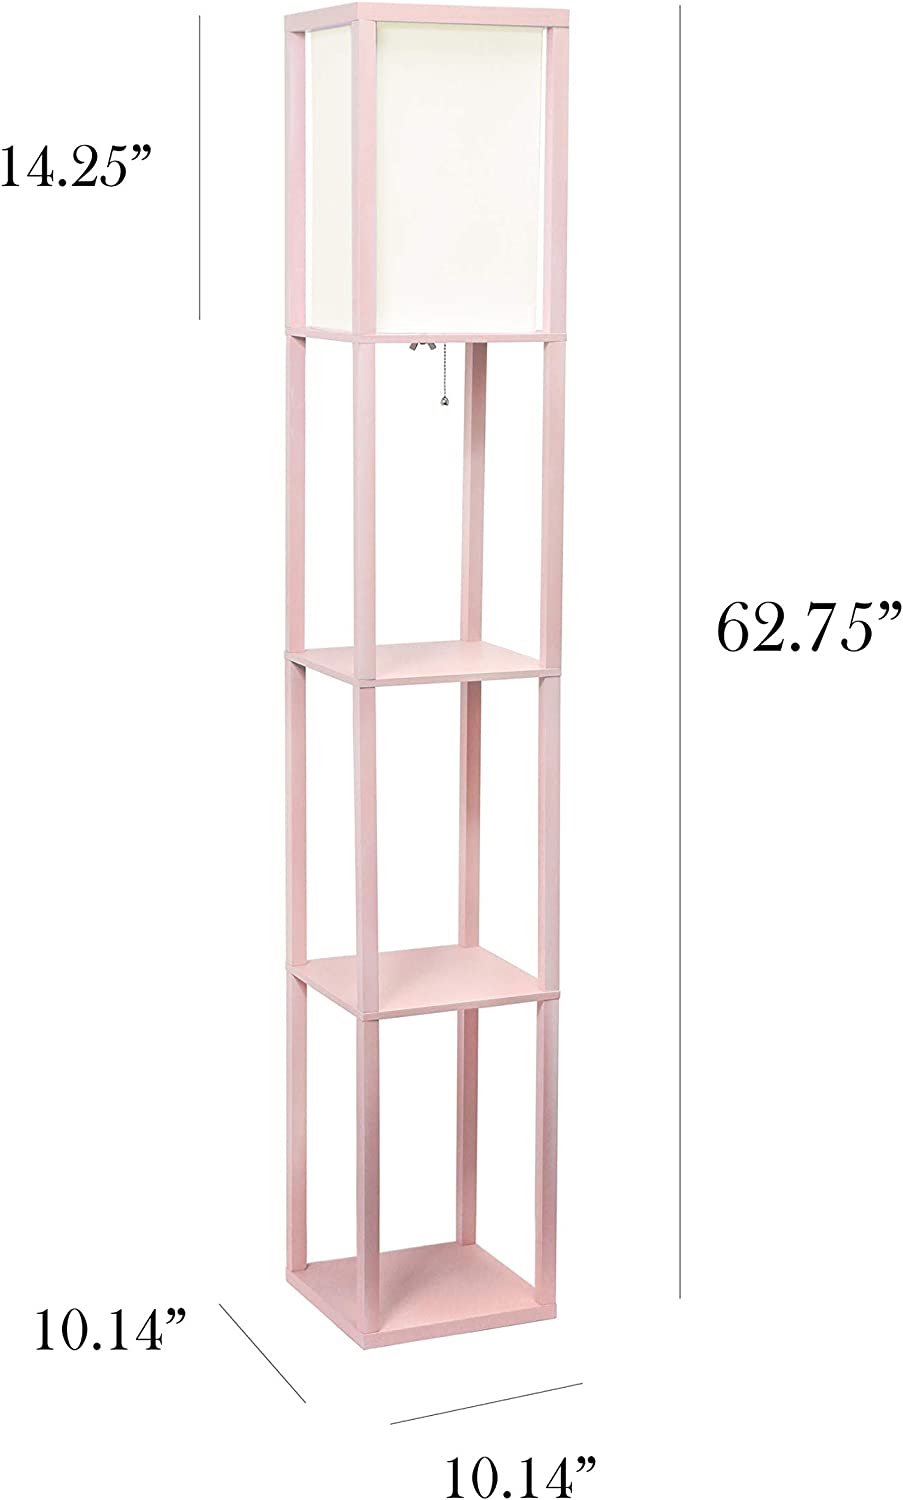 Simple Designs LF1014-LPK Etagere Organizer Storage Shelf Linen Shade Floor Lamp, Light Pink